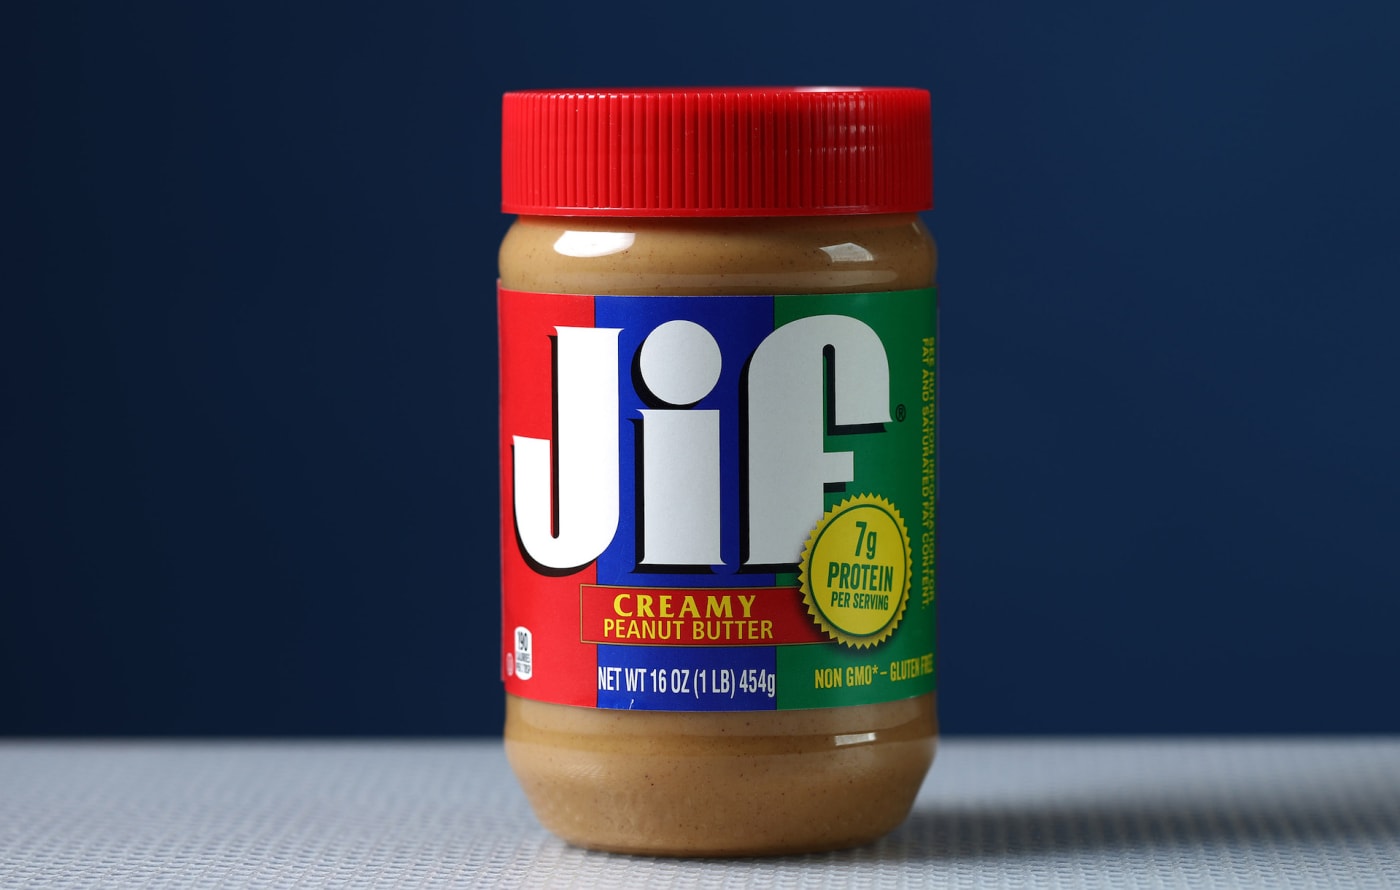 Jif peanut putter recalled over potential salmonella contamination